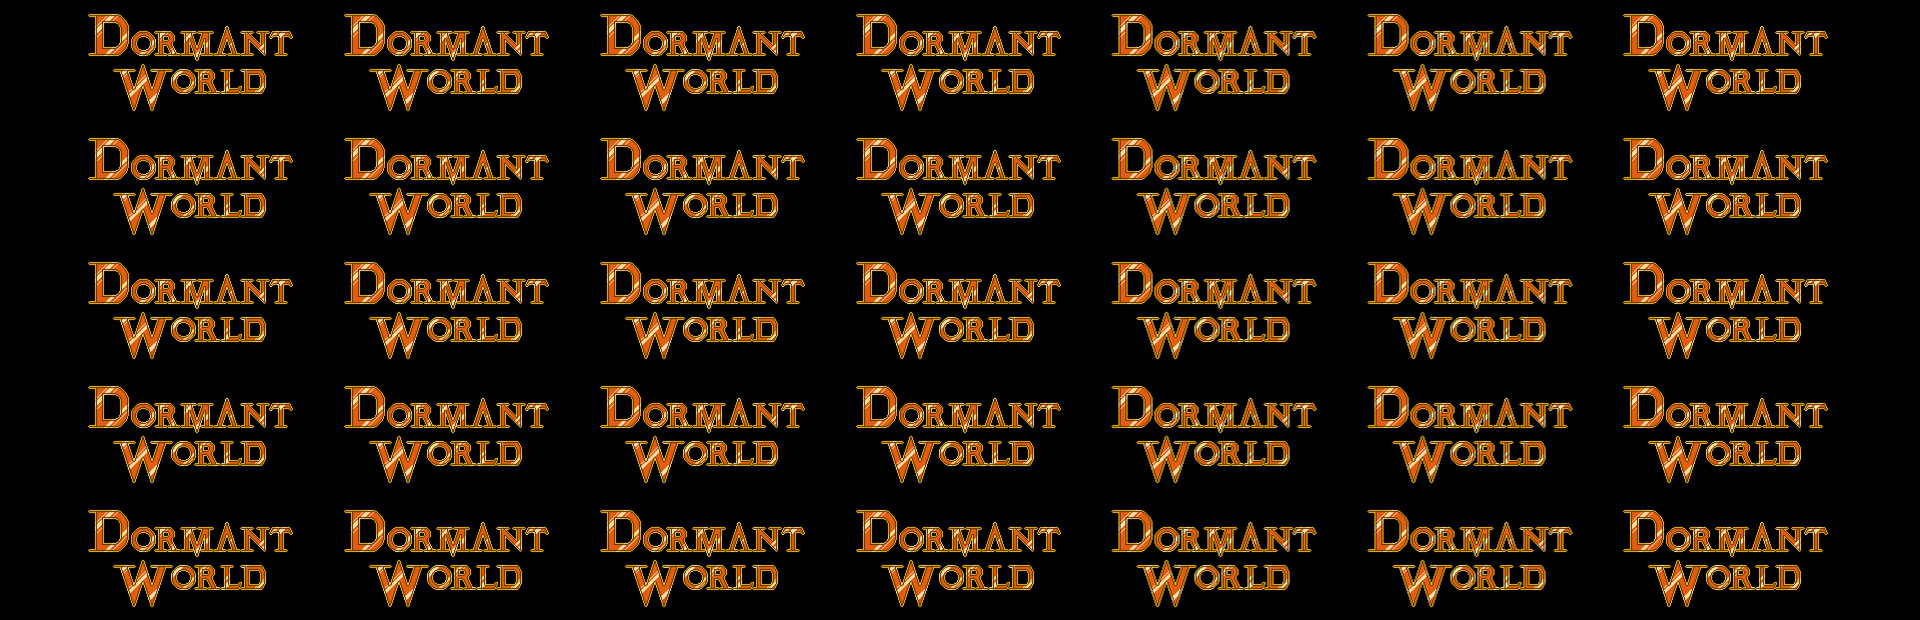 Dormant World cover image